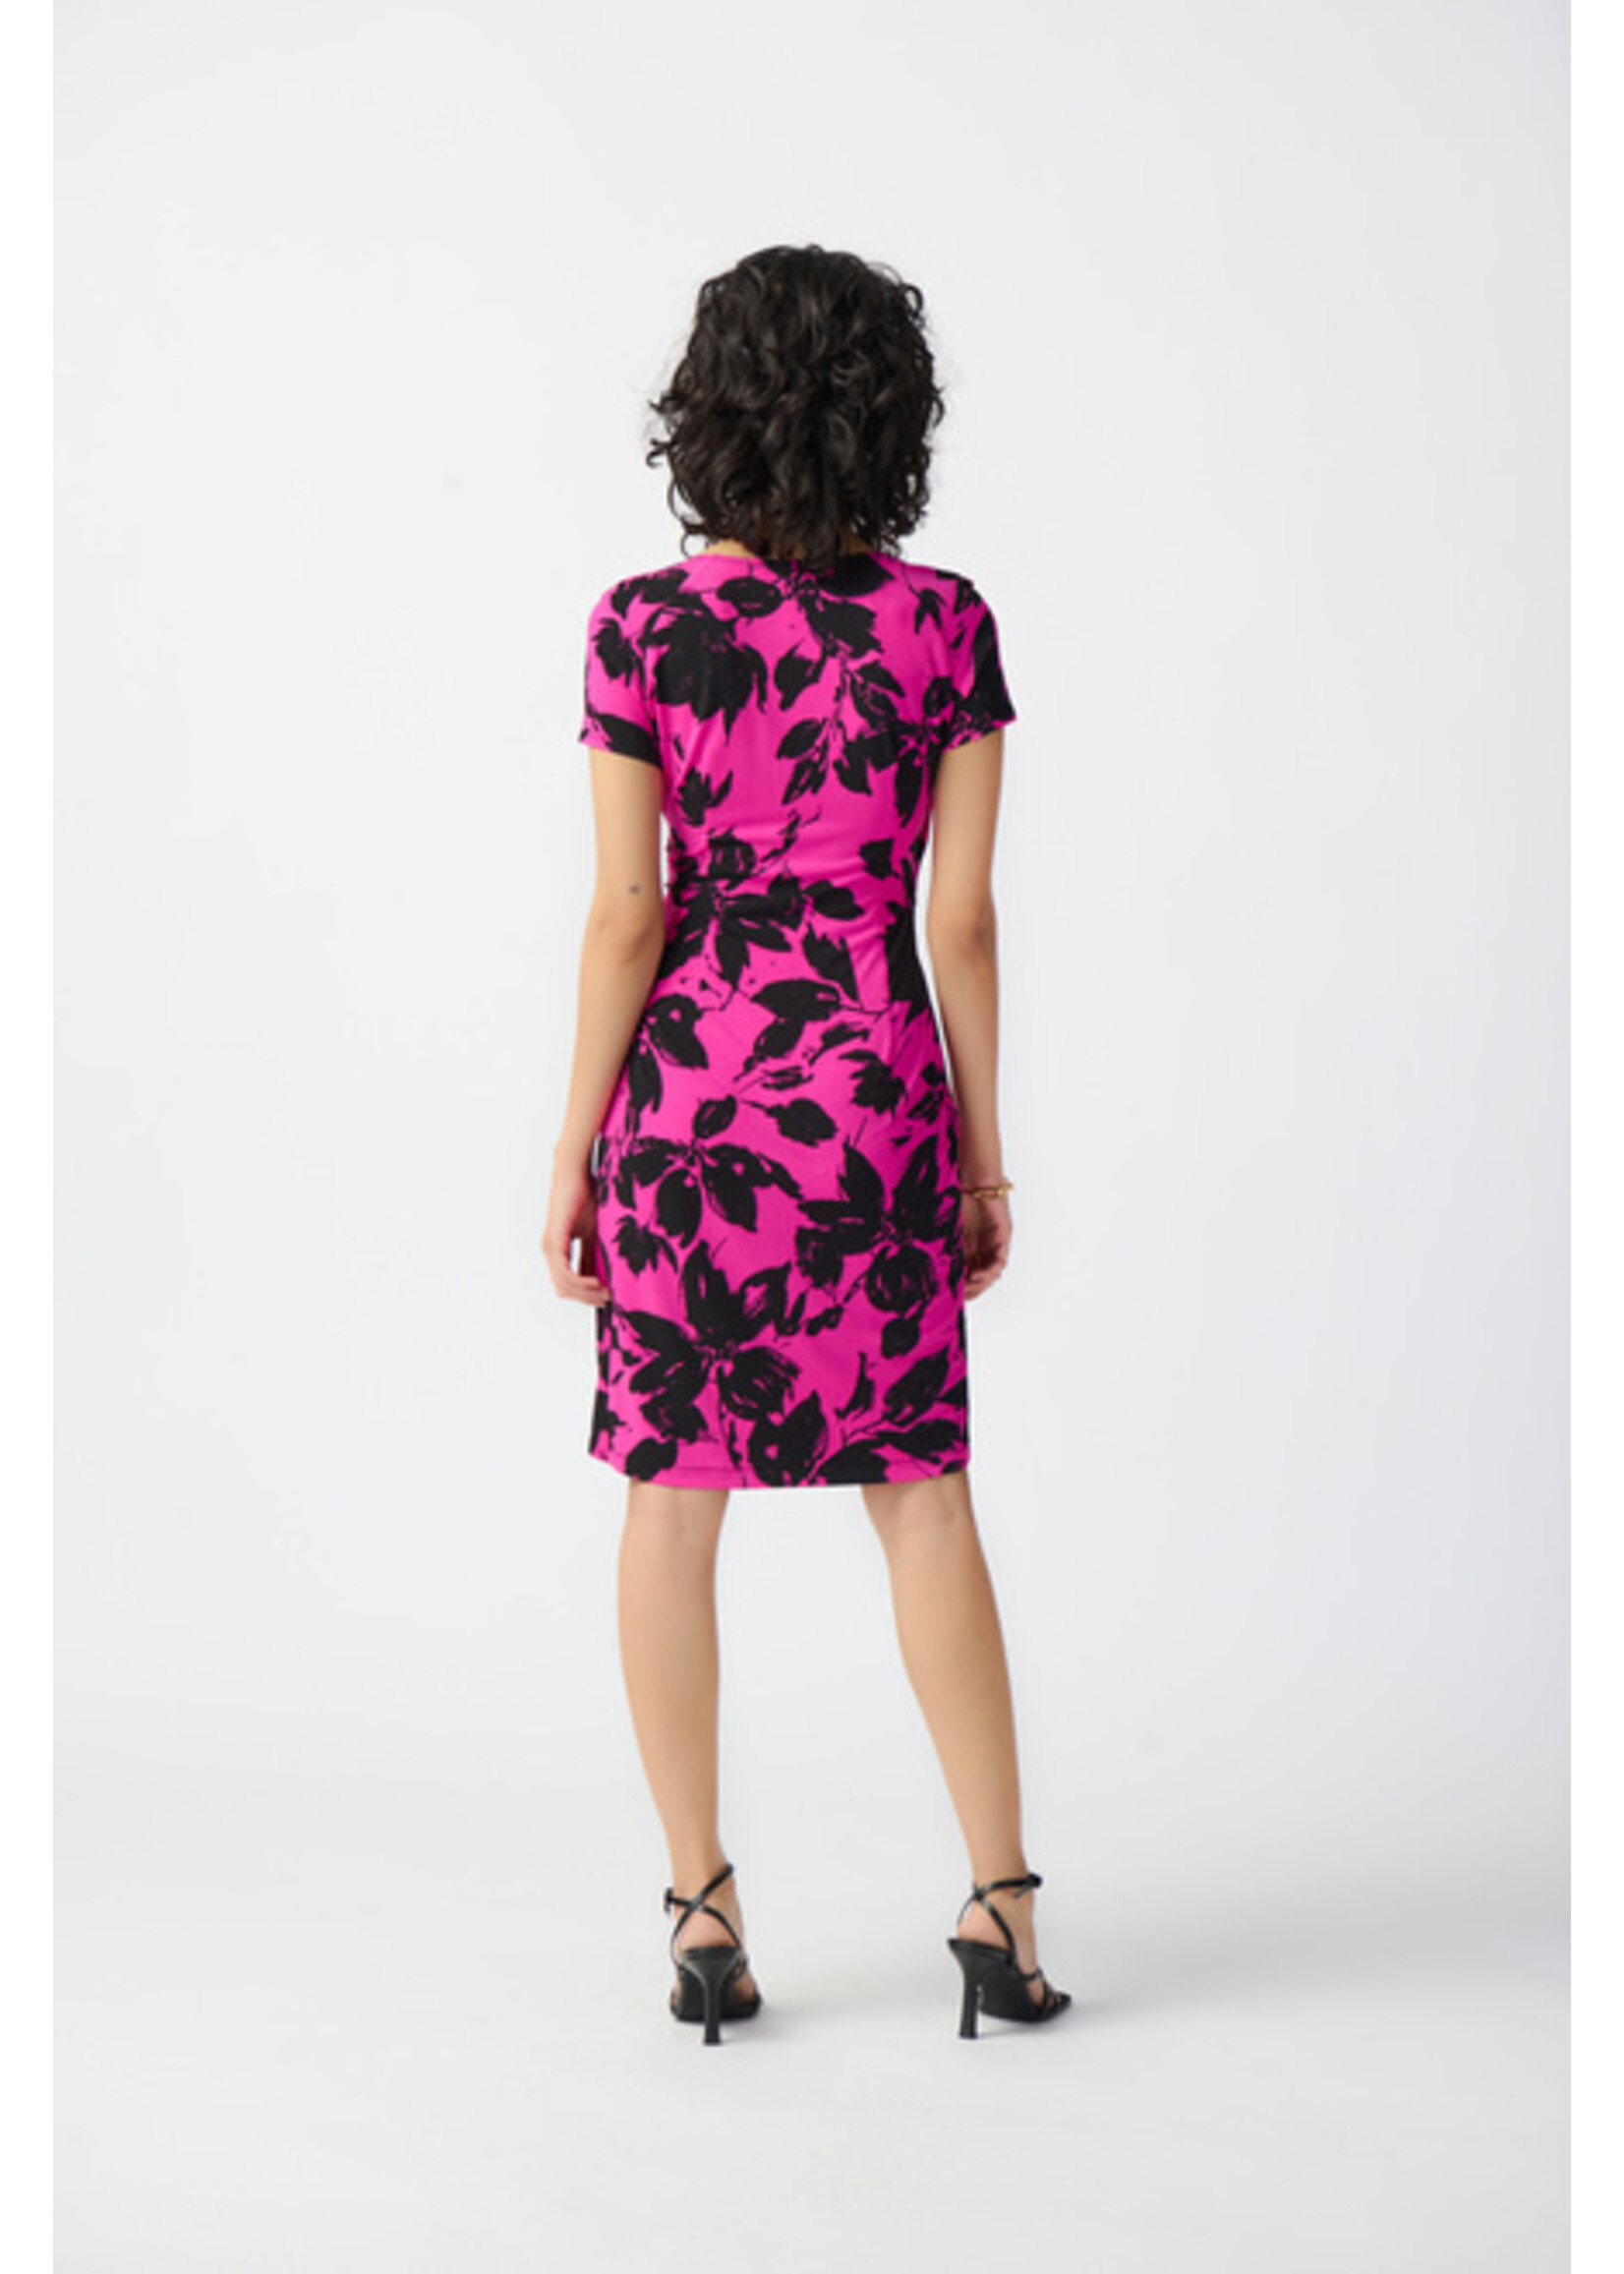 Joseph Ribkoff Floral Print Wrap Front Dress Style 241118